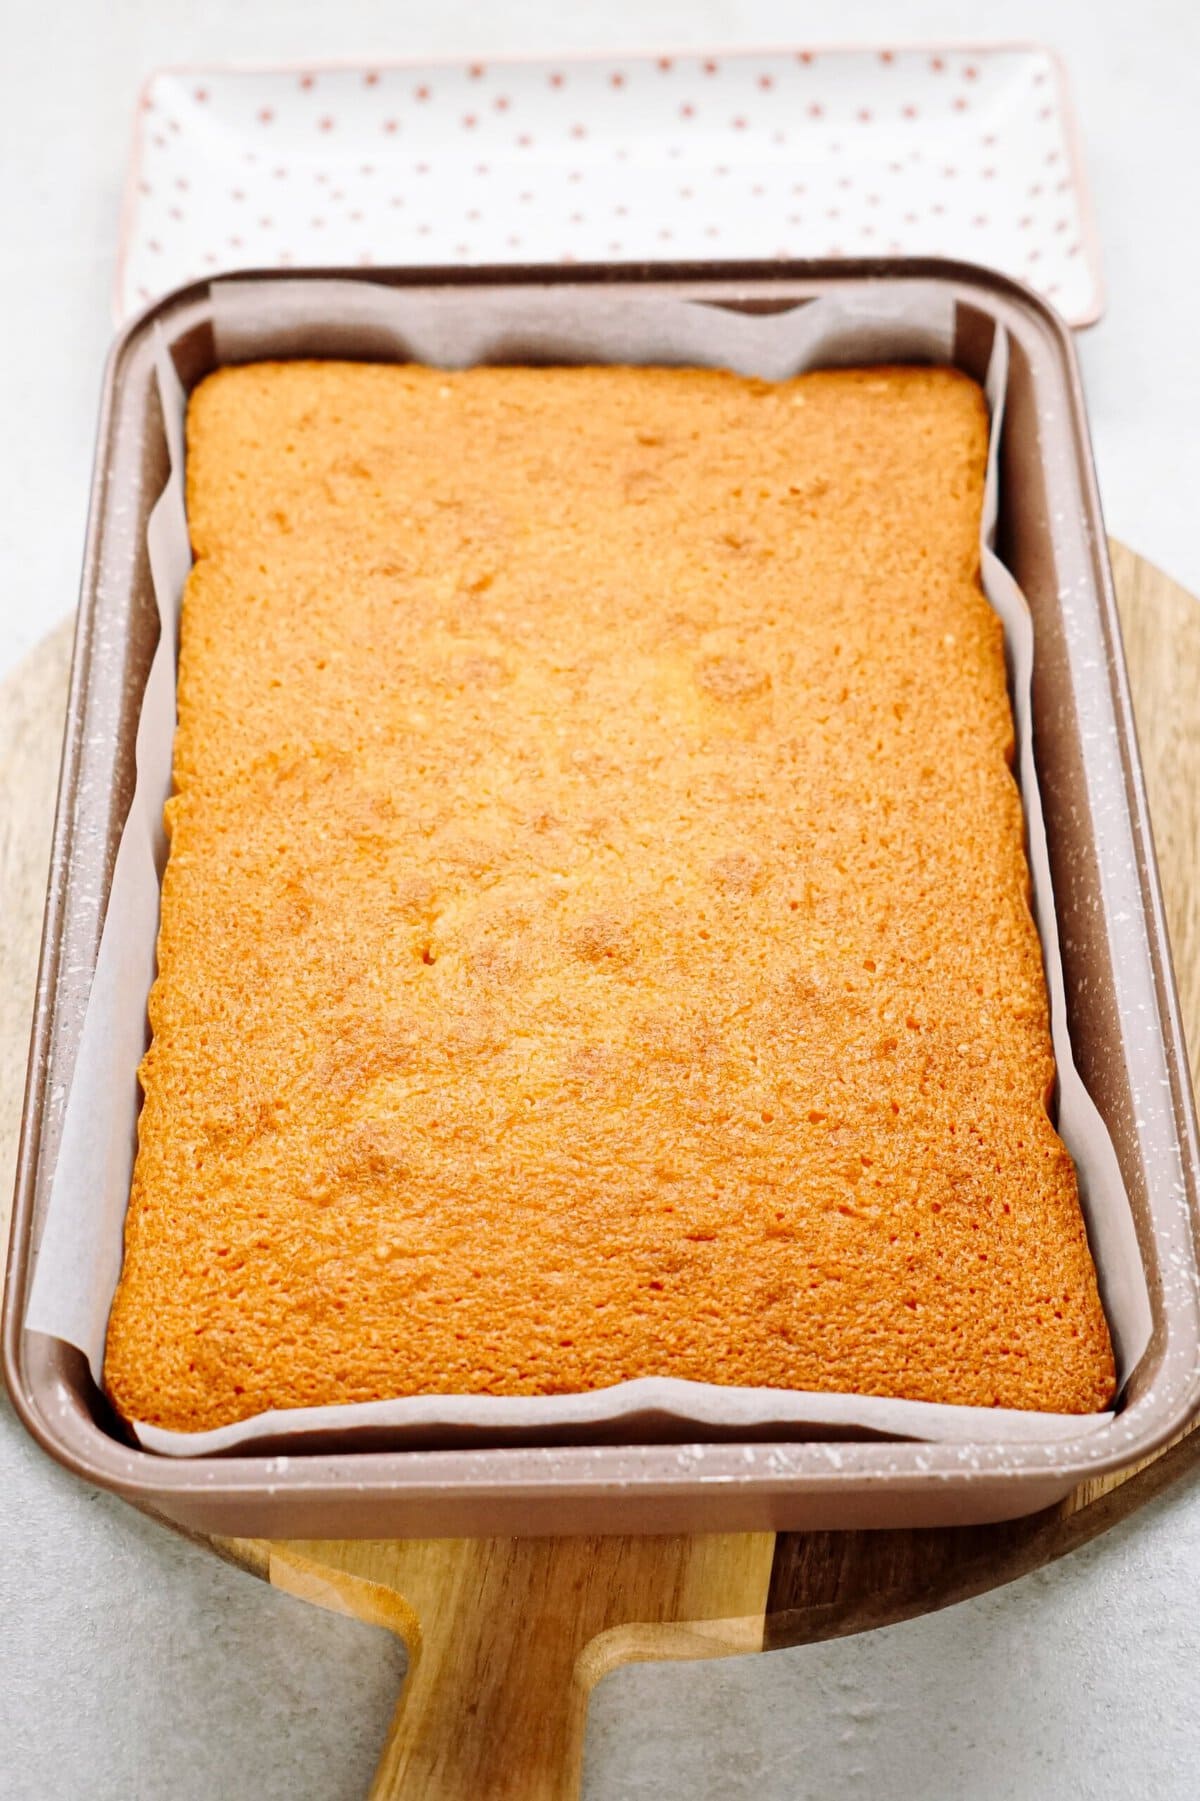 Freshly baked sponge cake in a rectangular baking dish on a wooden board.